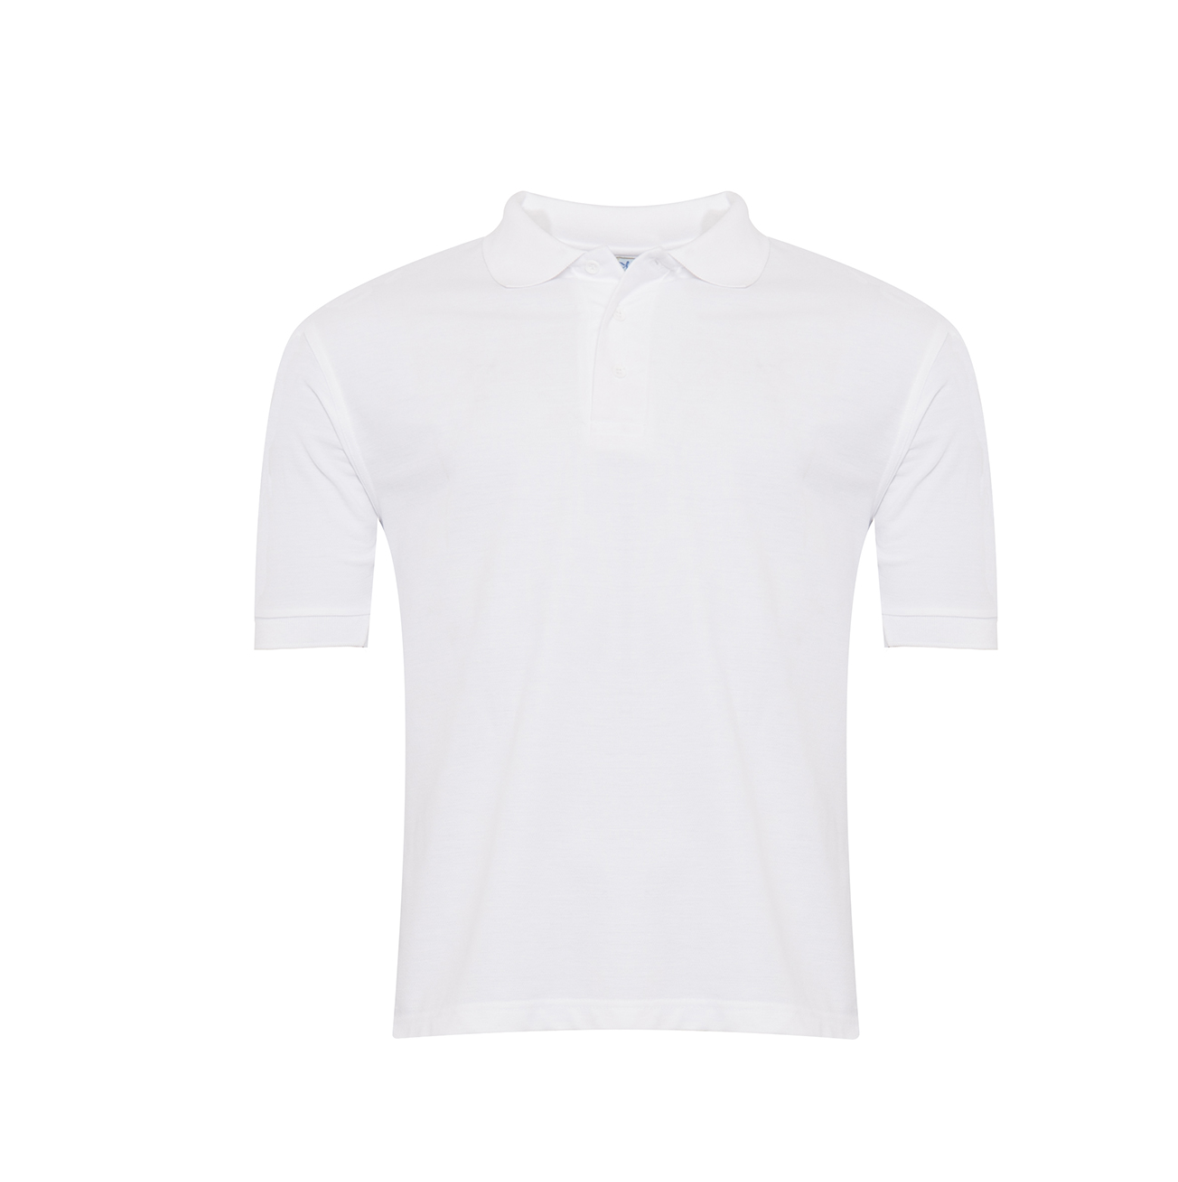 Unisex Plain White Polo Shirt - Schoolwear Solutions